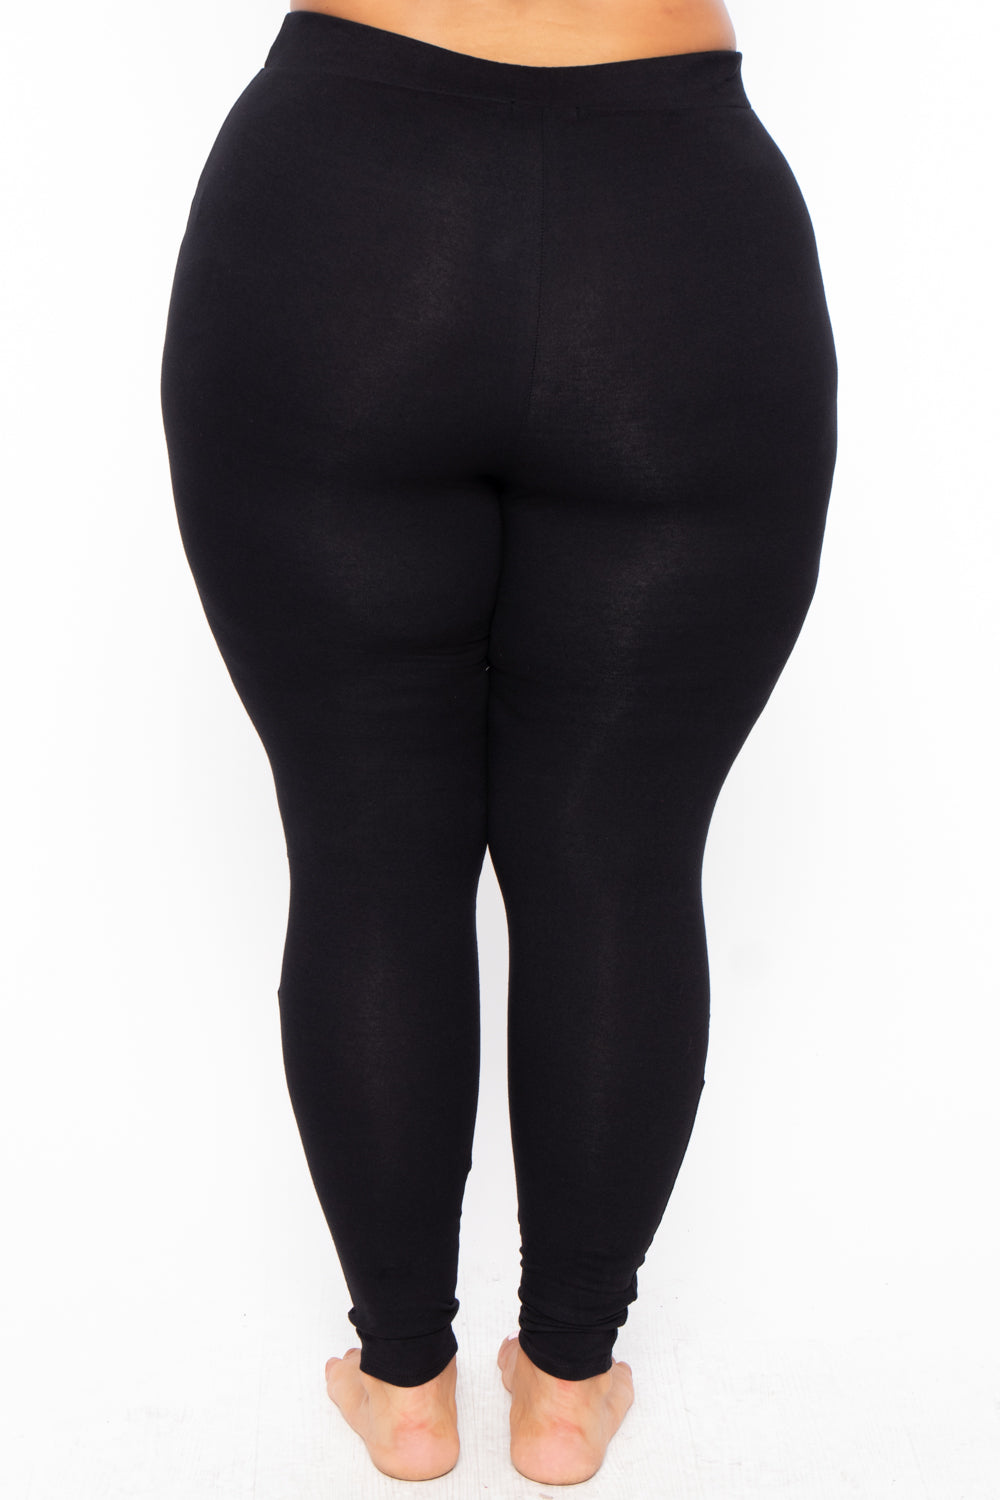 LEG-13 {Glamorous Crosses} Cross Printed Black Leggings EXTENDED PLUS –  Curvy Boutique Plus Size Clothing